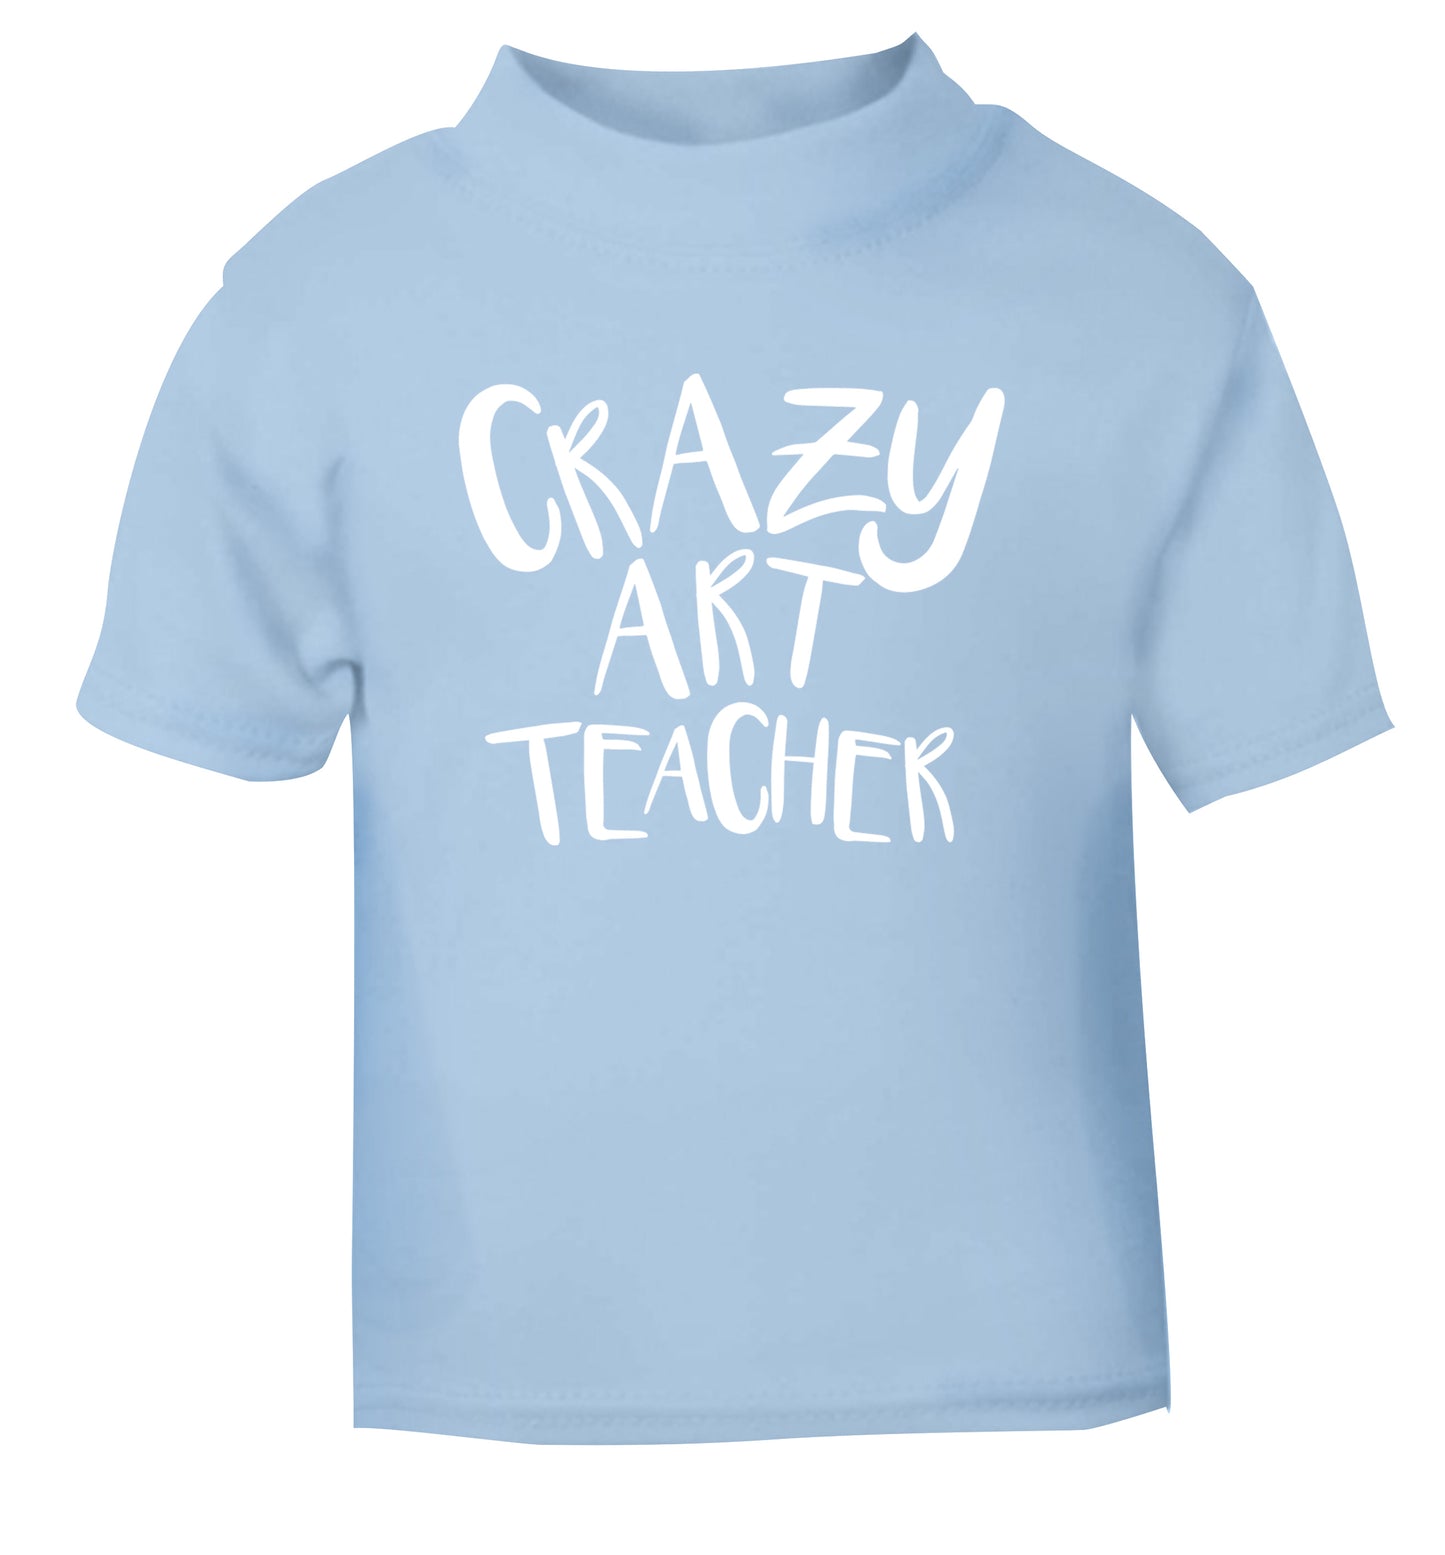 Crazy art teacher light blue Baby Toddler Tshirt 2 Years